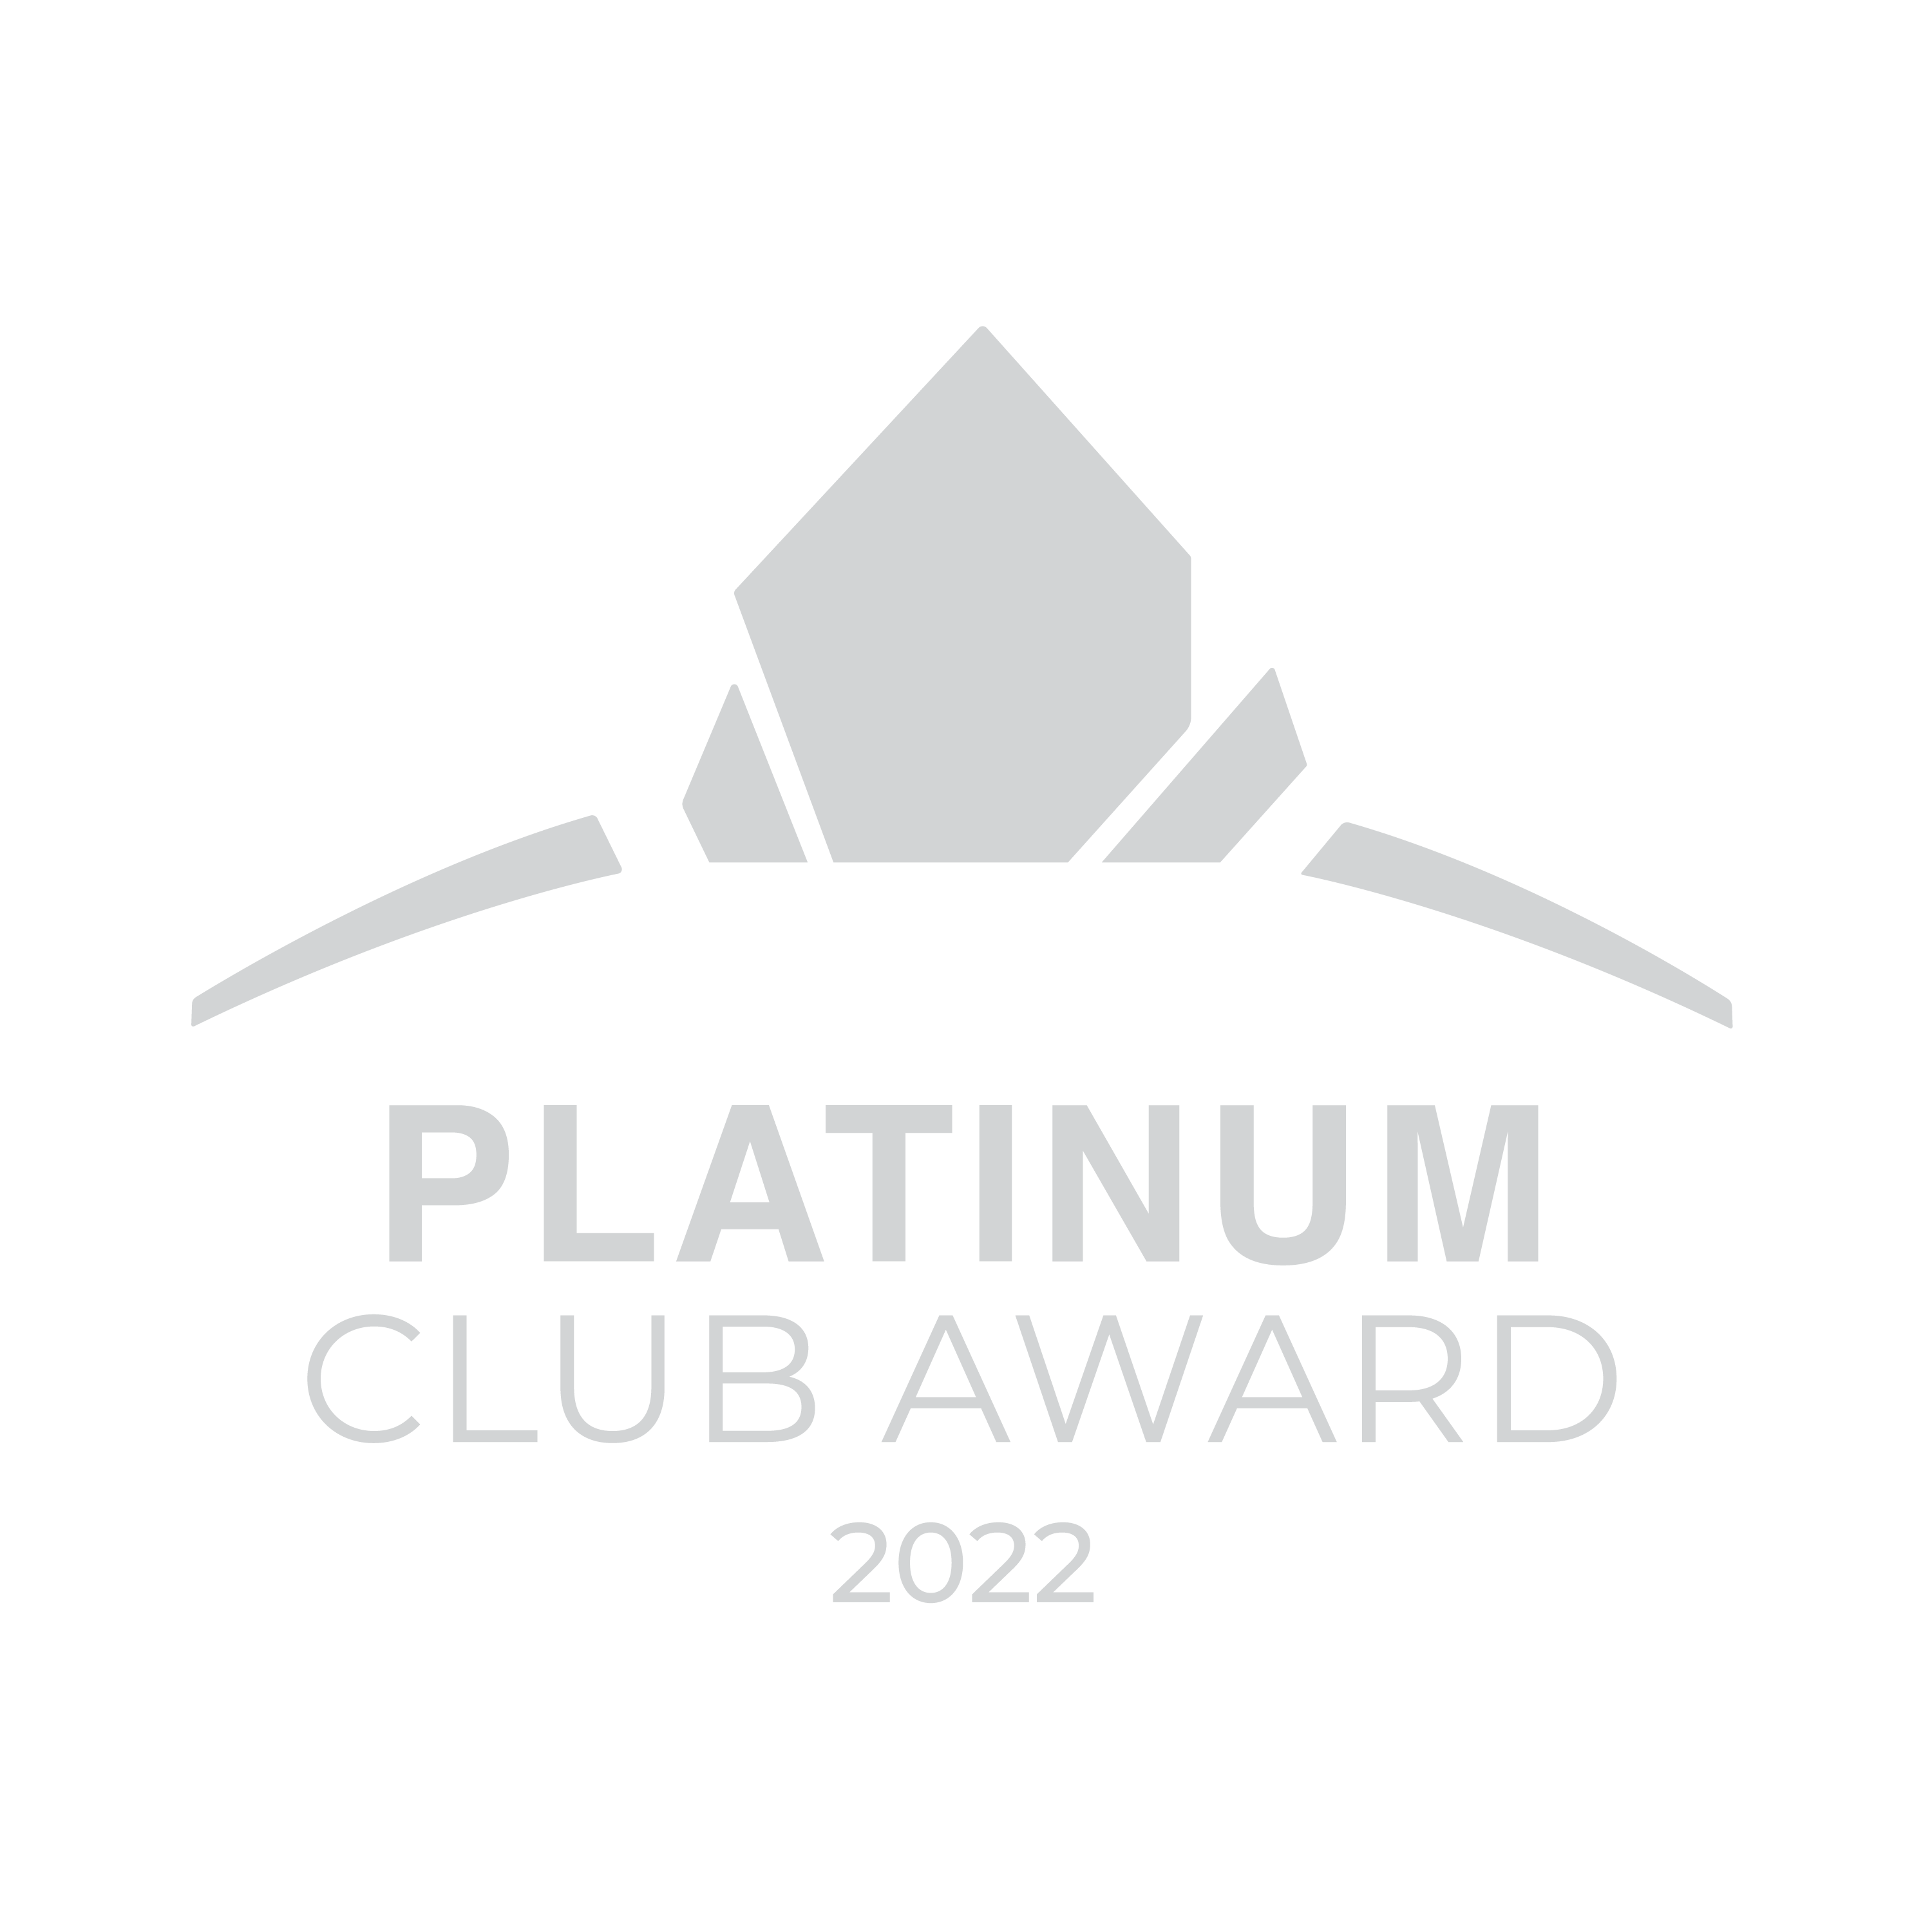 Platinum Club Award